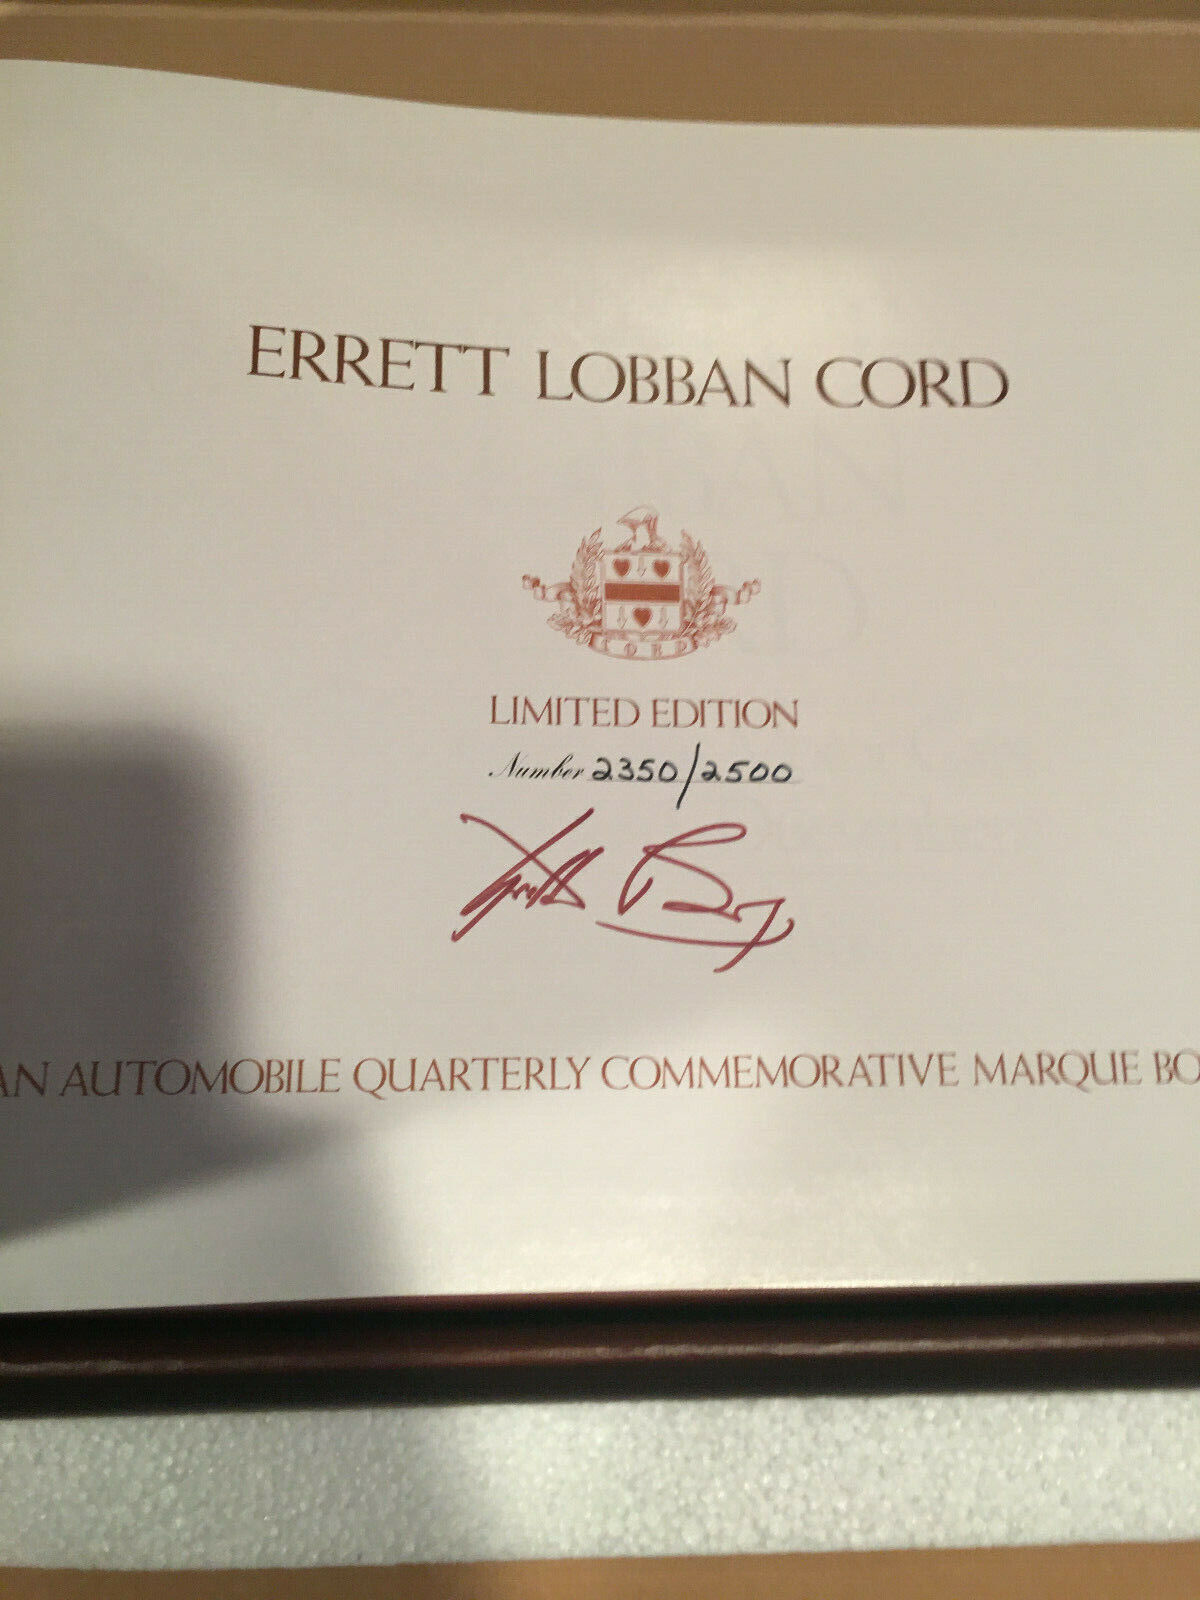 ERRETT LOBBAN CORD LAST BOOK WITH CASE #2350 PRODUCED BY AUTOMOBILE QUARTERLY